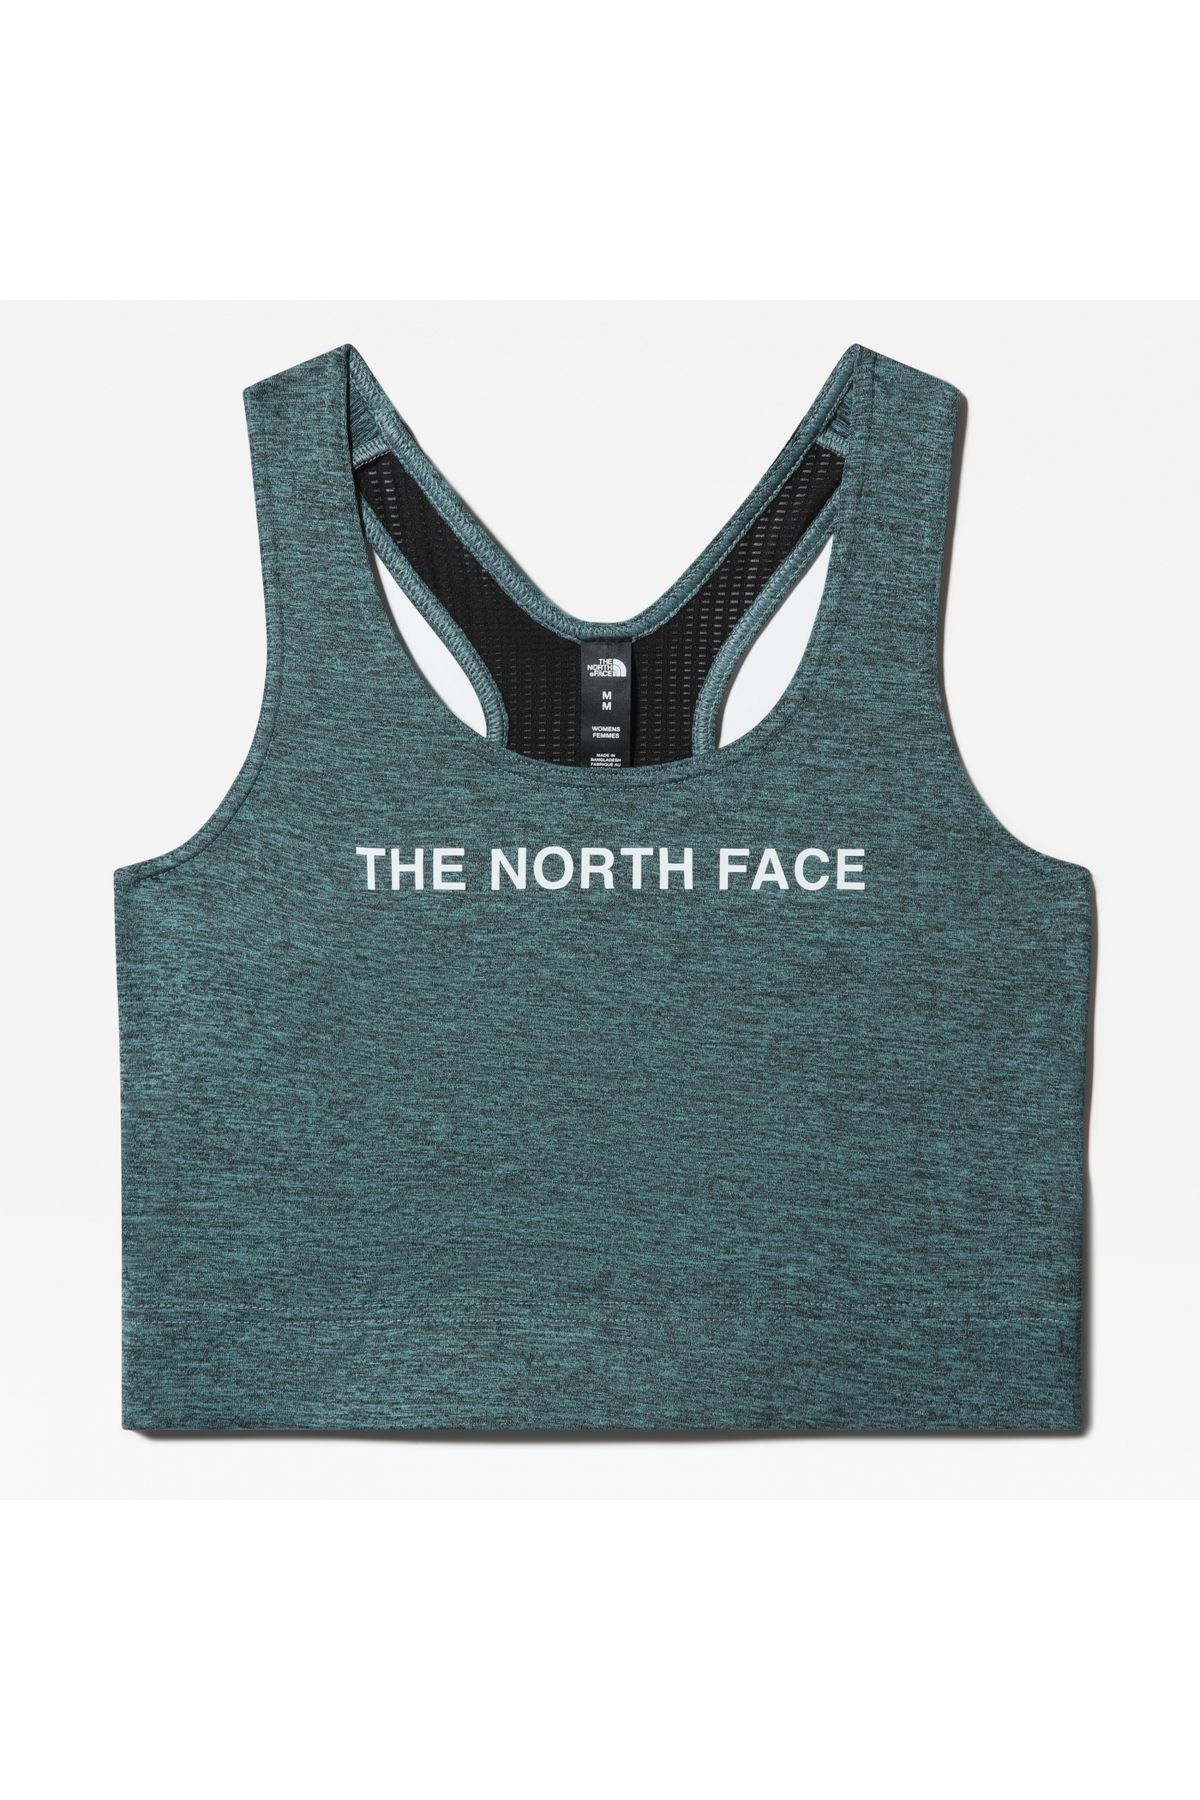 The North Face Mountain Athletics Tanklette Mavi Kadın Bra-nf0a5ıf95w91